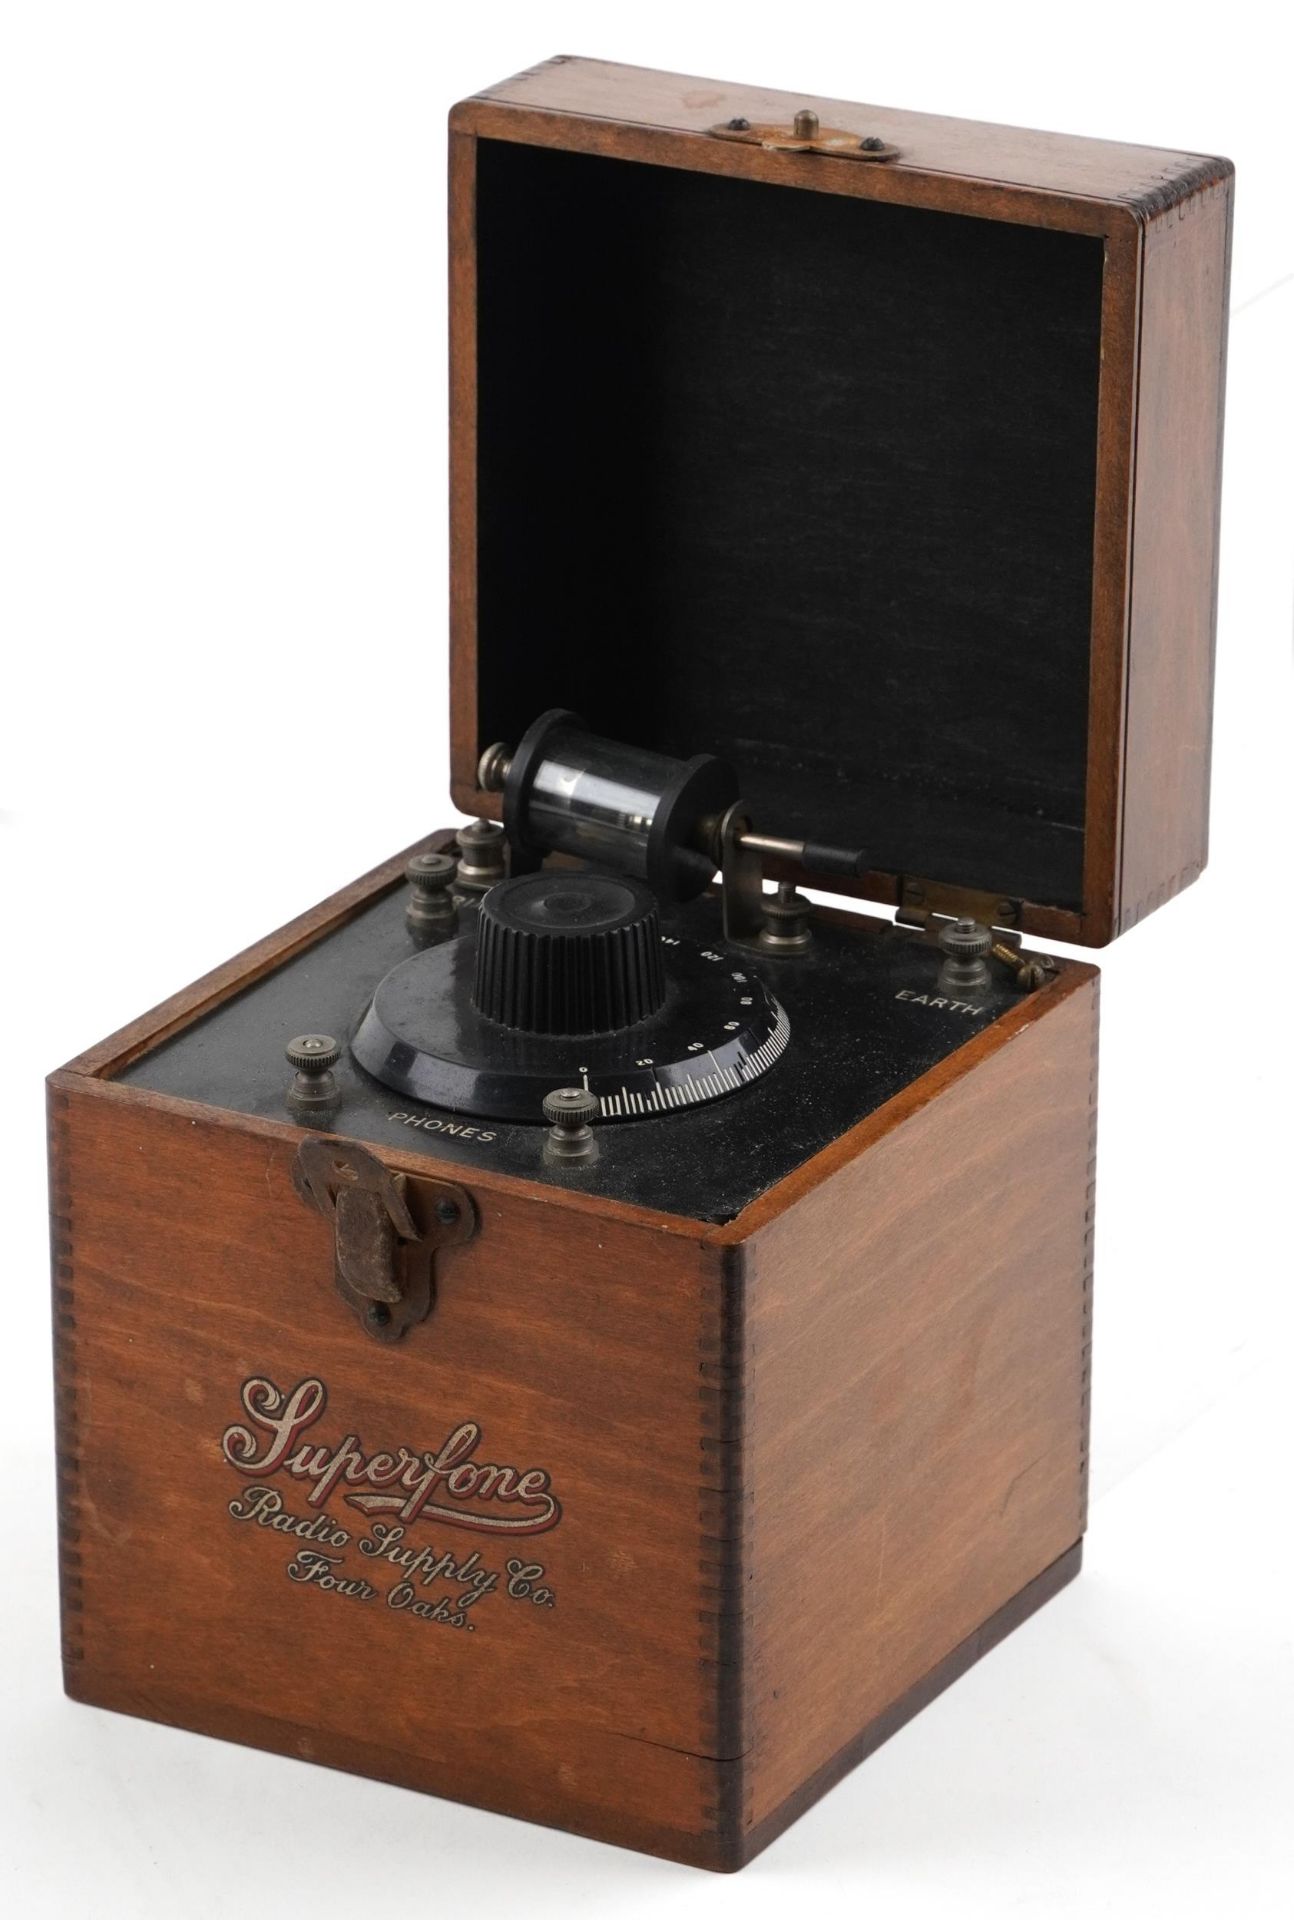 Vintage BBC voltmeter, 17cm high